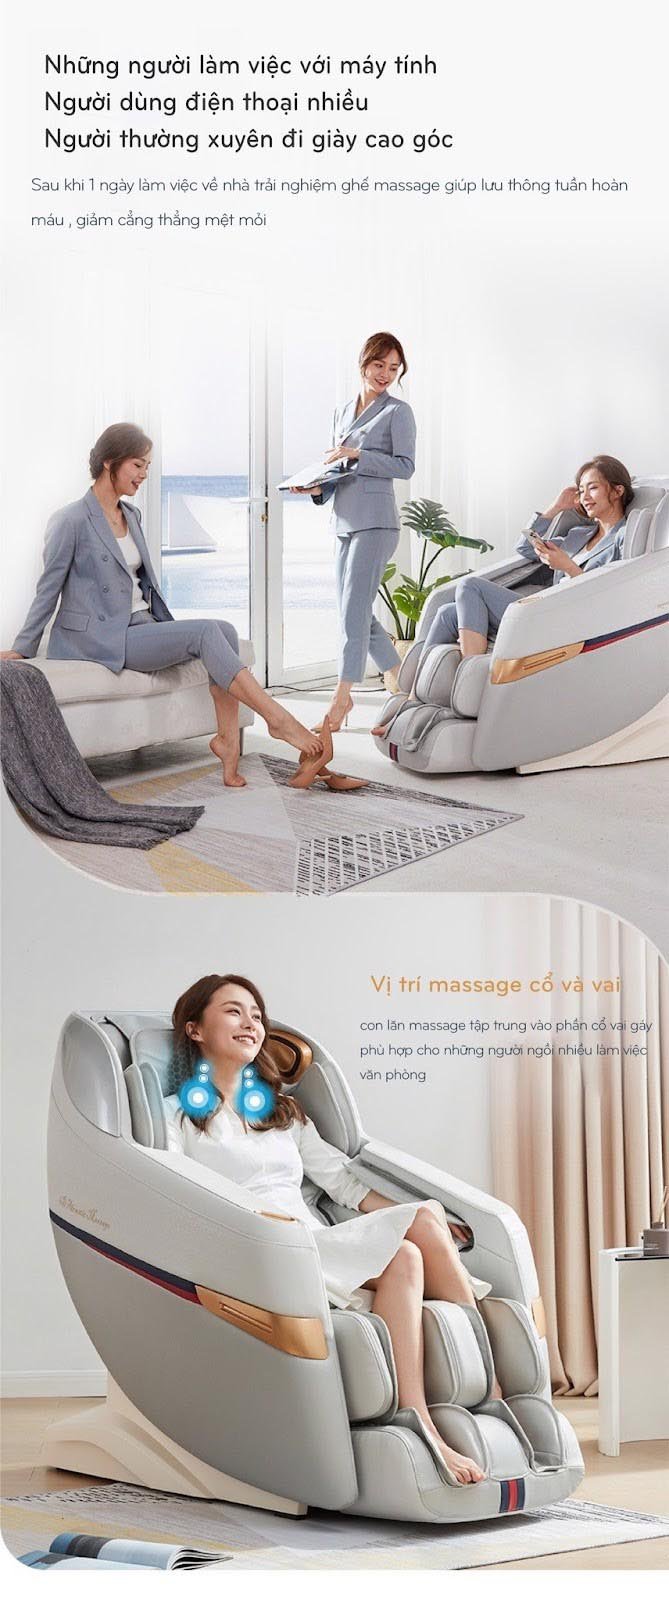 Massage chân ghế massage OS 950